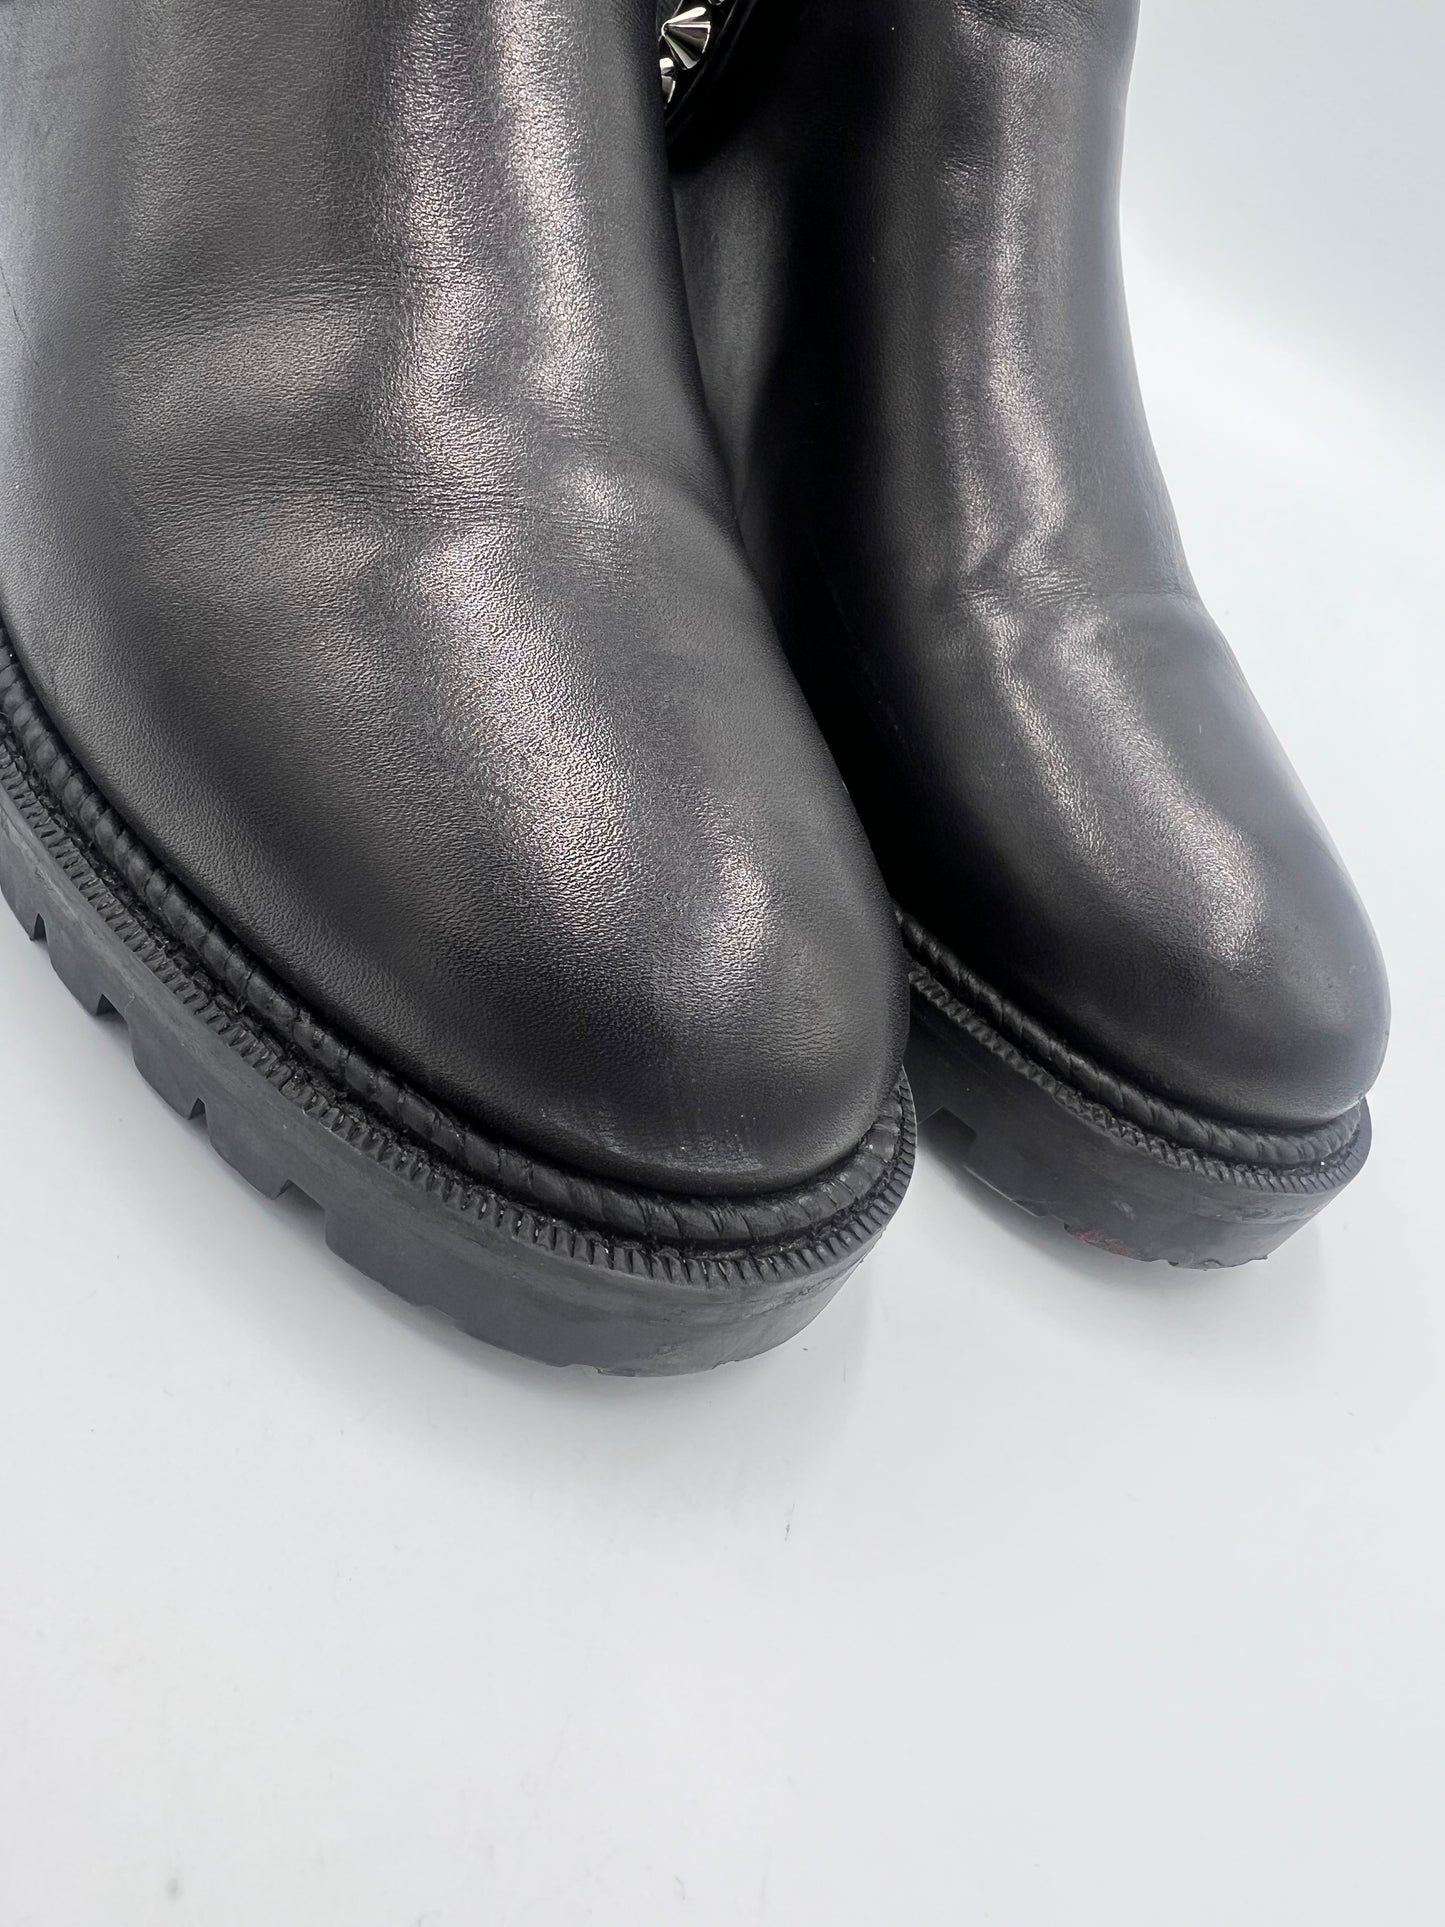 Christian Louboutin Capuhutta Mini Boot  Size: 6.5 (36.5)